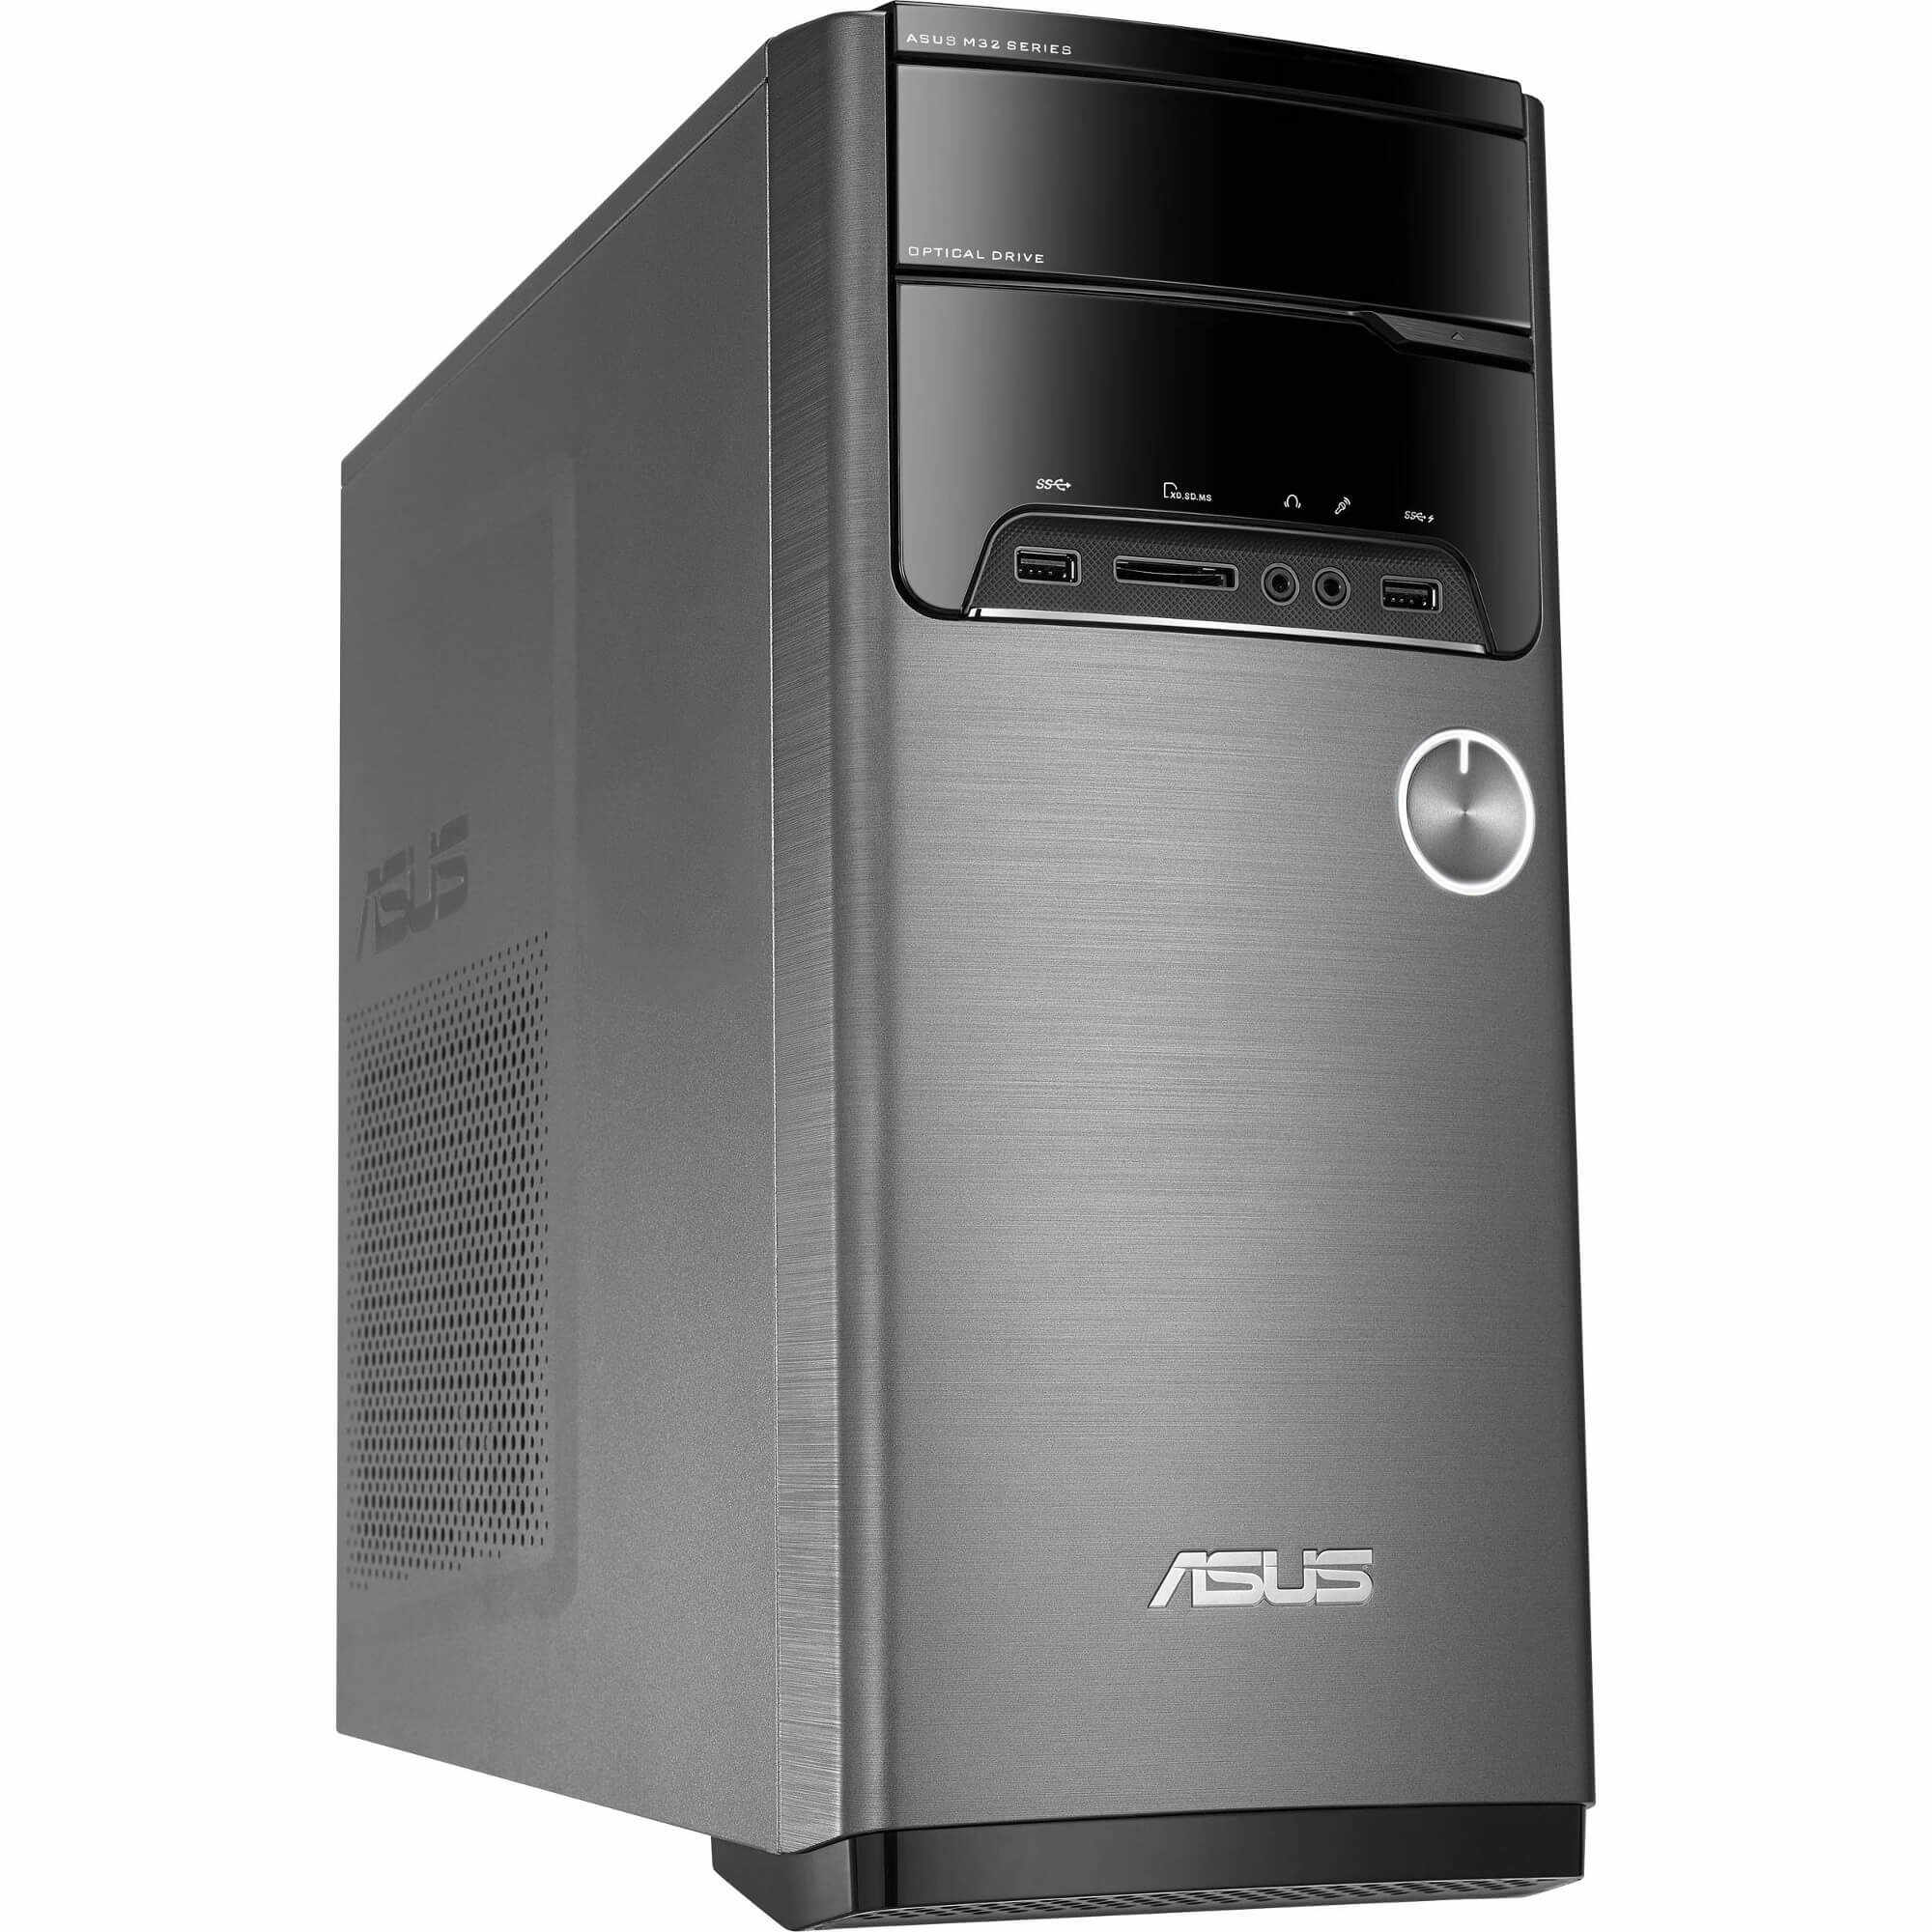 Sistem Desktop PC Asus M32CD, Intel Core i5-6400, 8GB DDR4, HDD 1TB + SSD 128GB, nVidia GeForce GTX 950 2GB, Free DOS